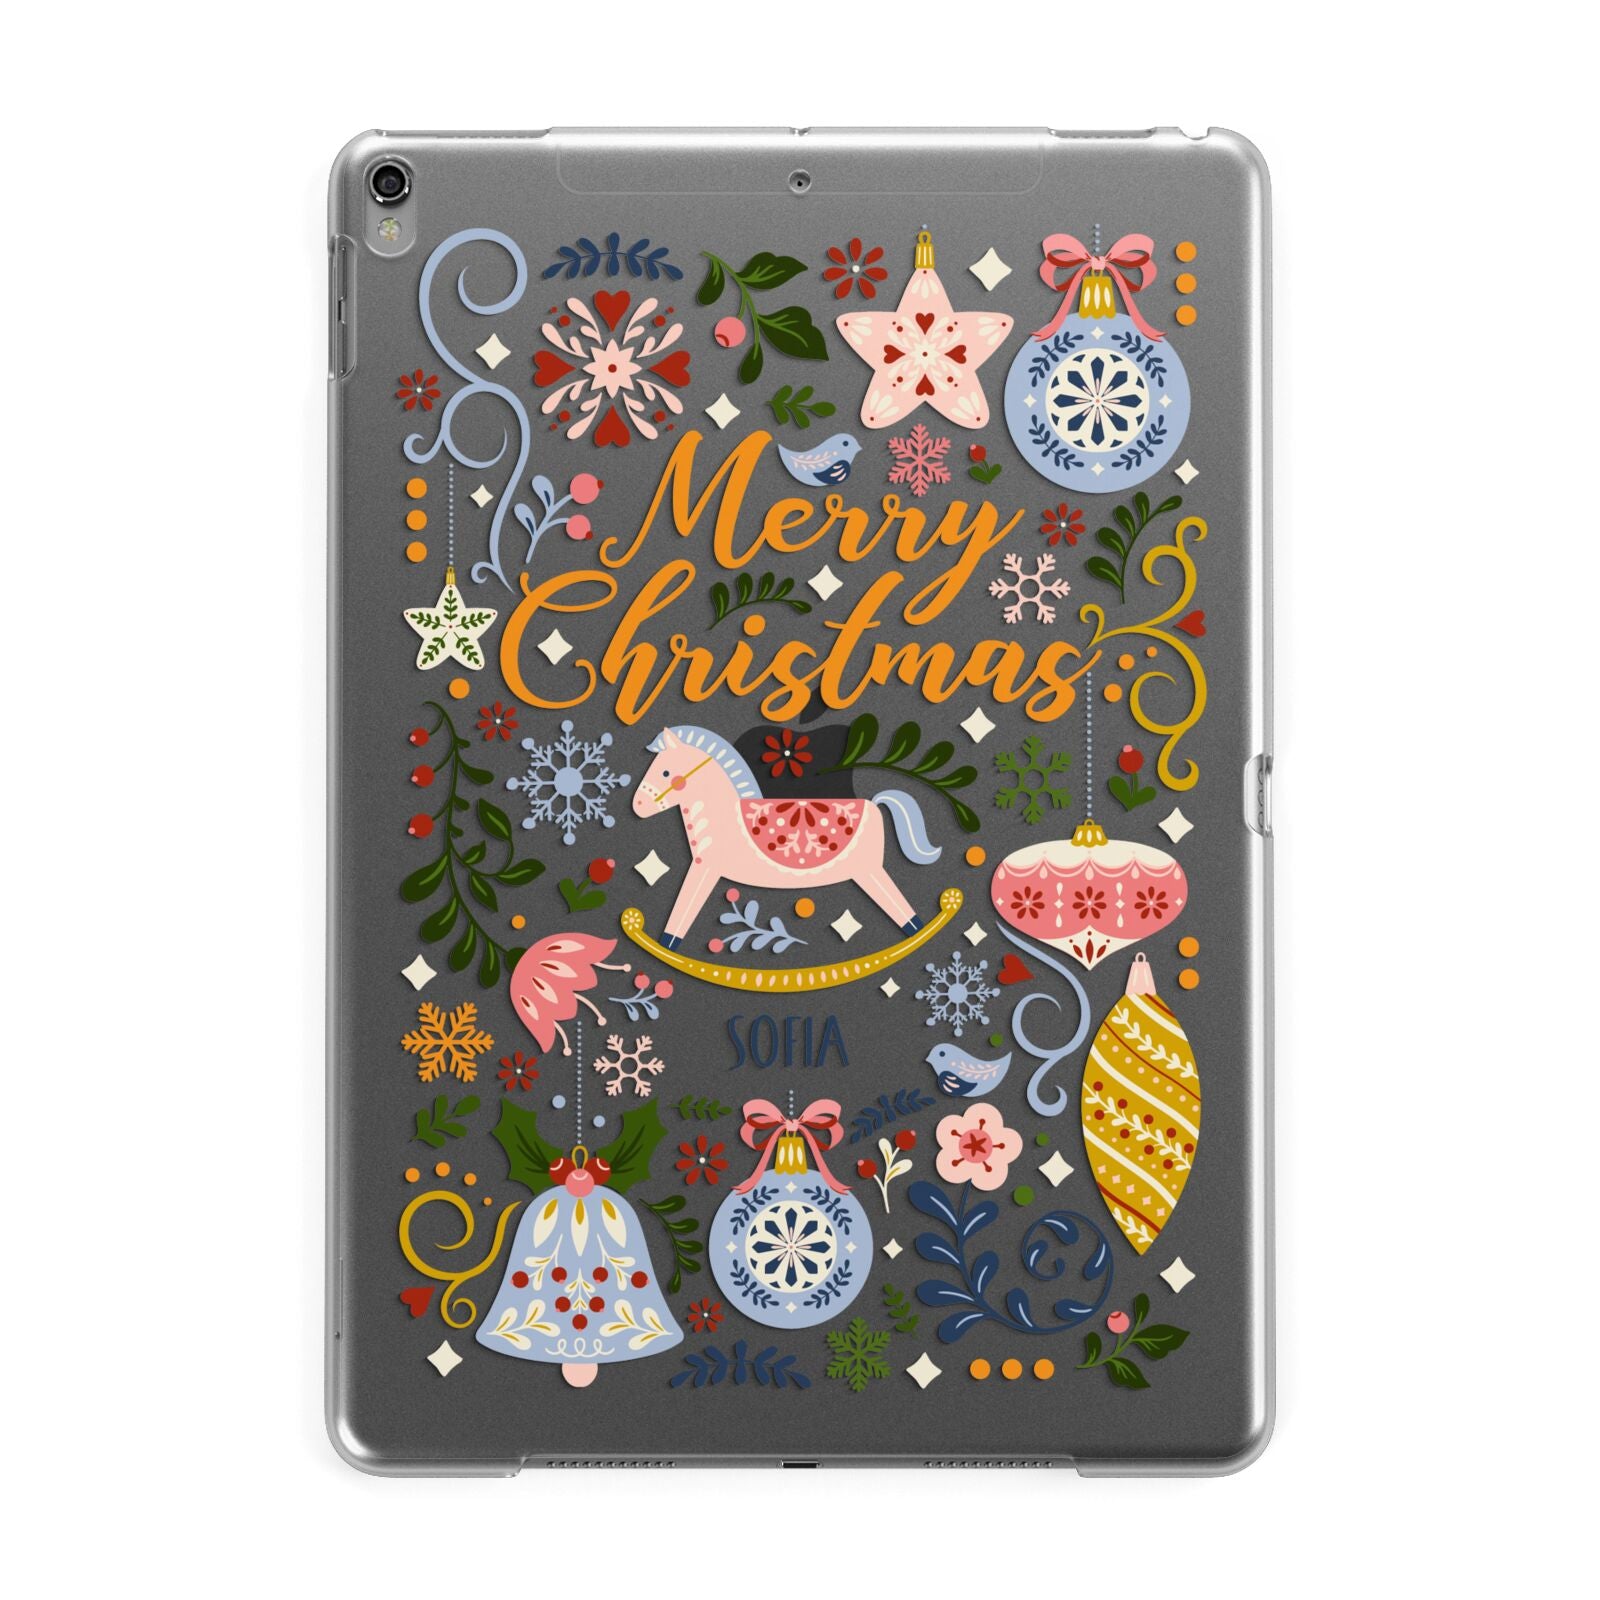 Merry Christmas Illustrated Apple iPad Grey Case